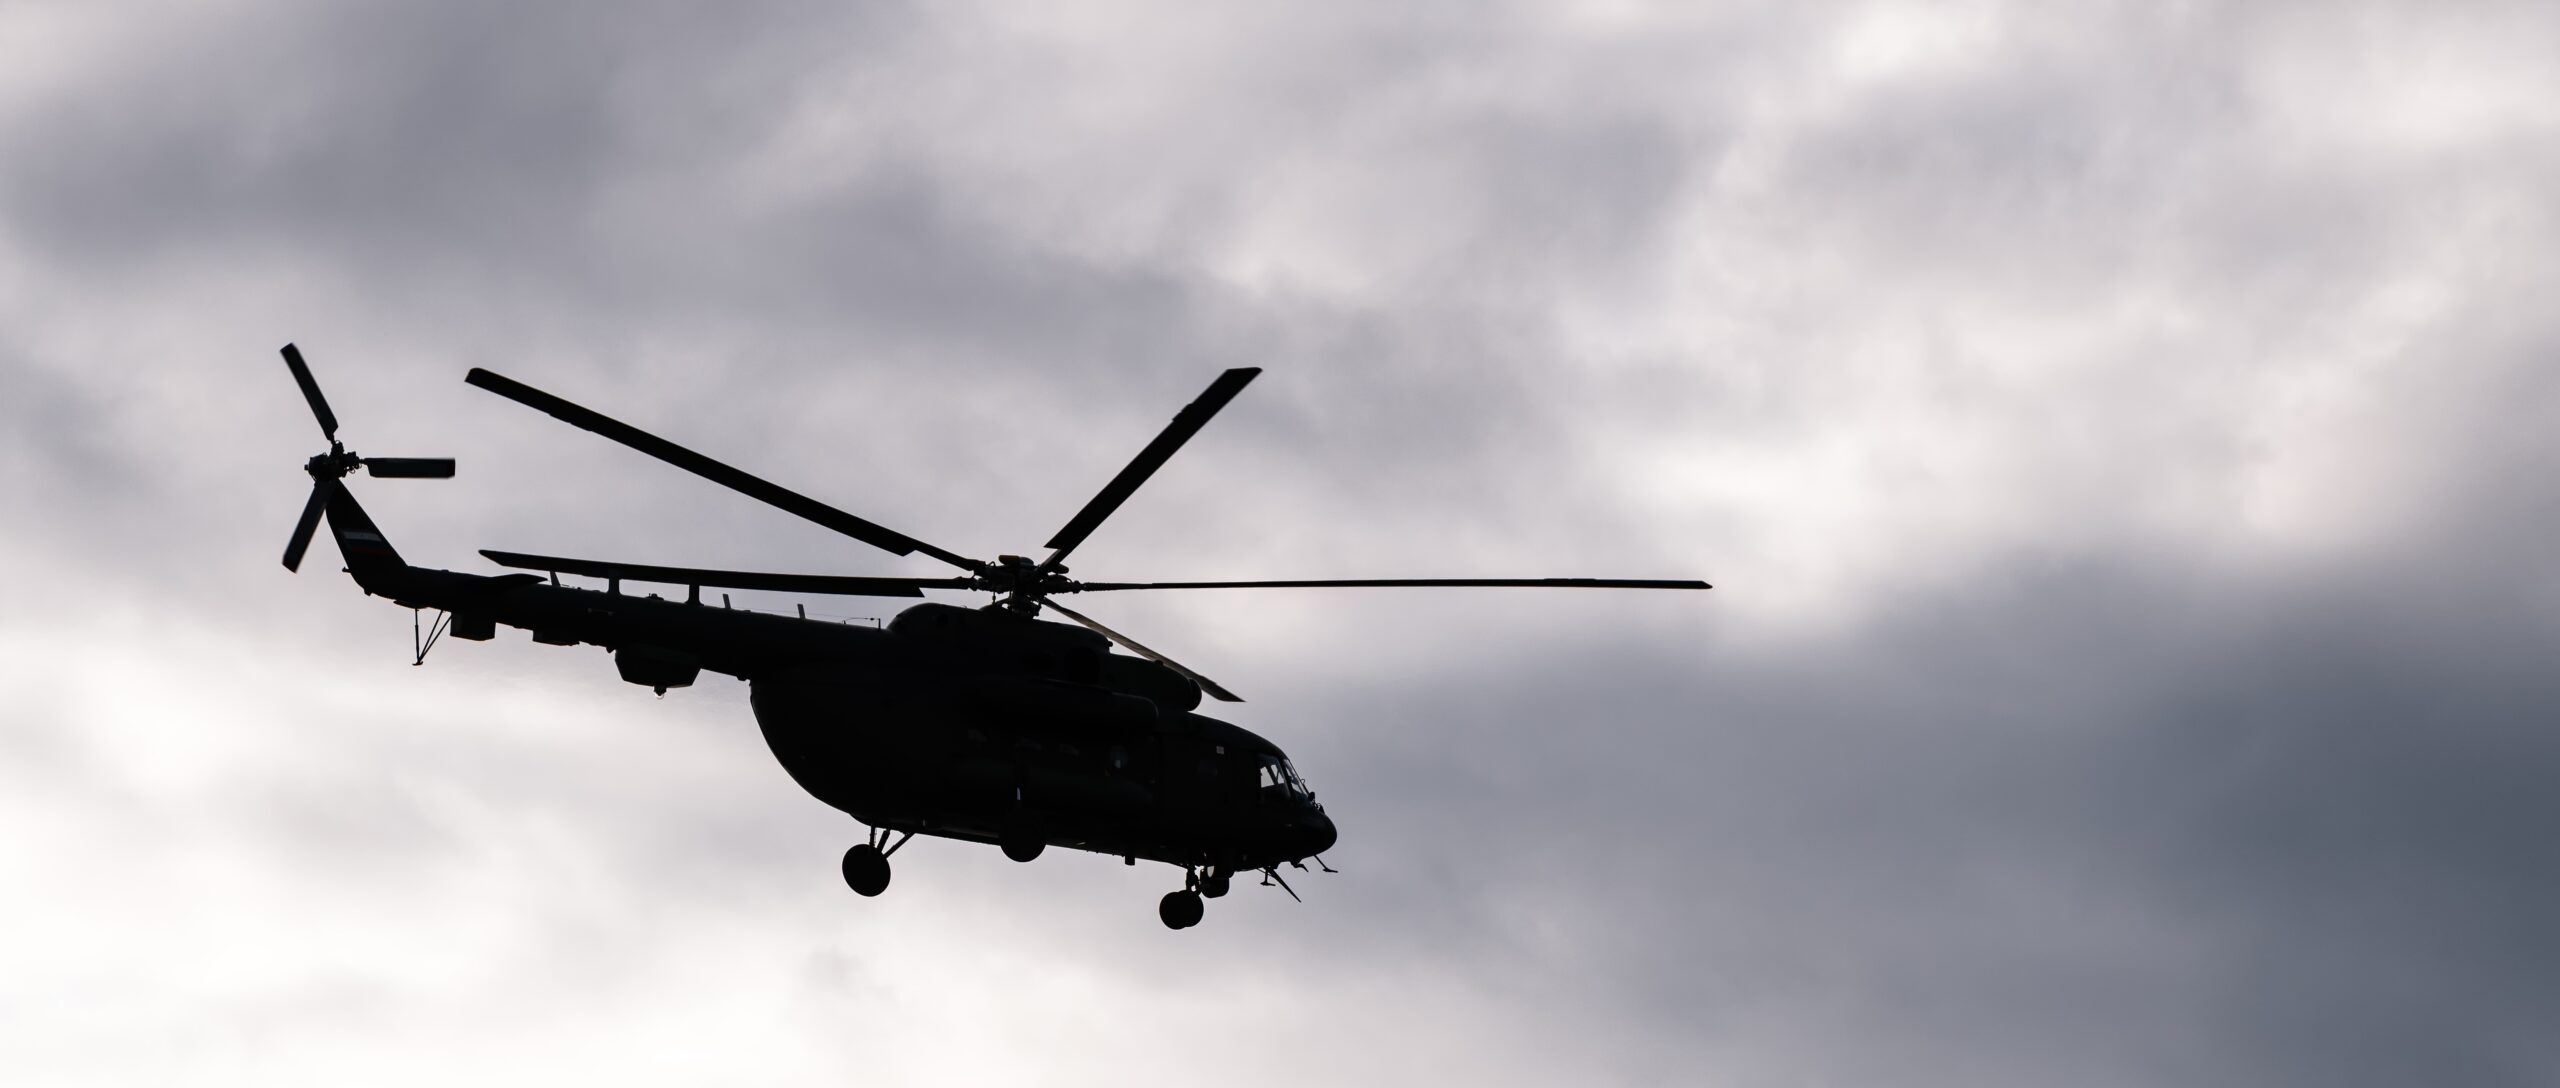 Ukrainian FPV drone downs $15 million Russian Mi-8